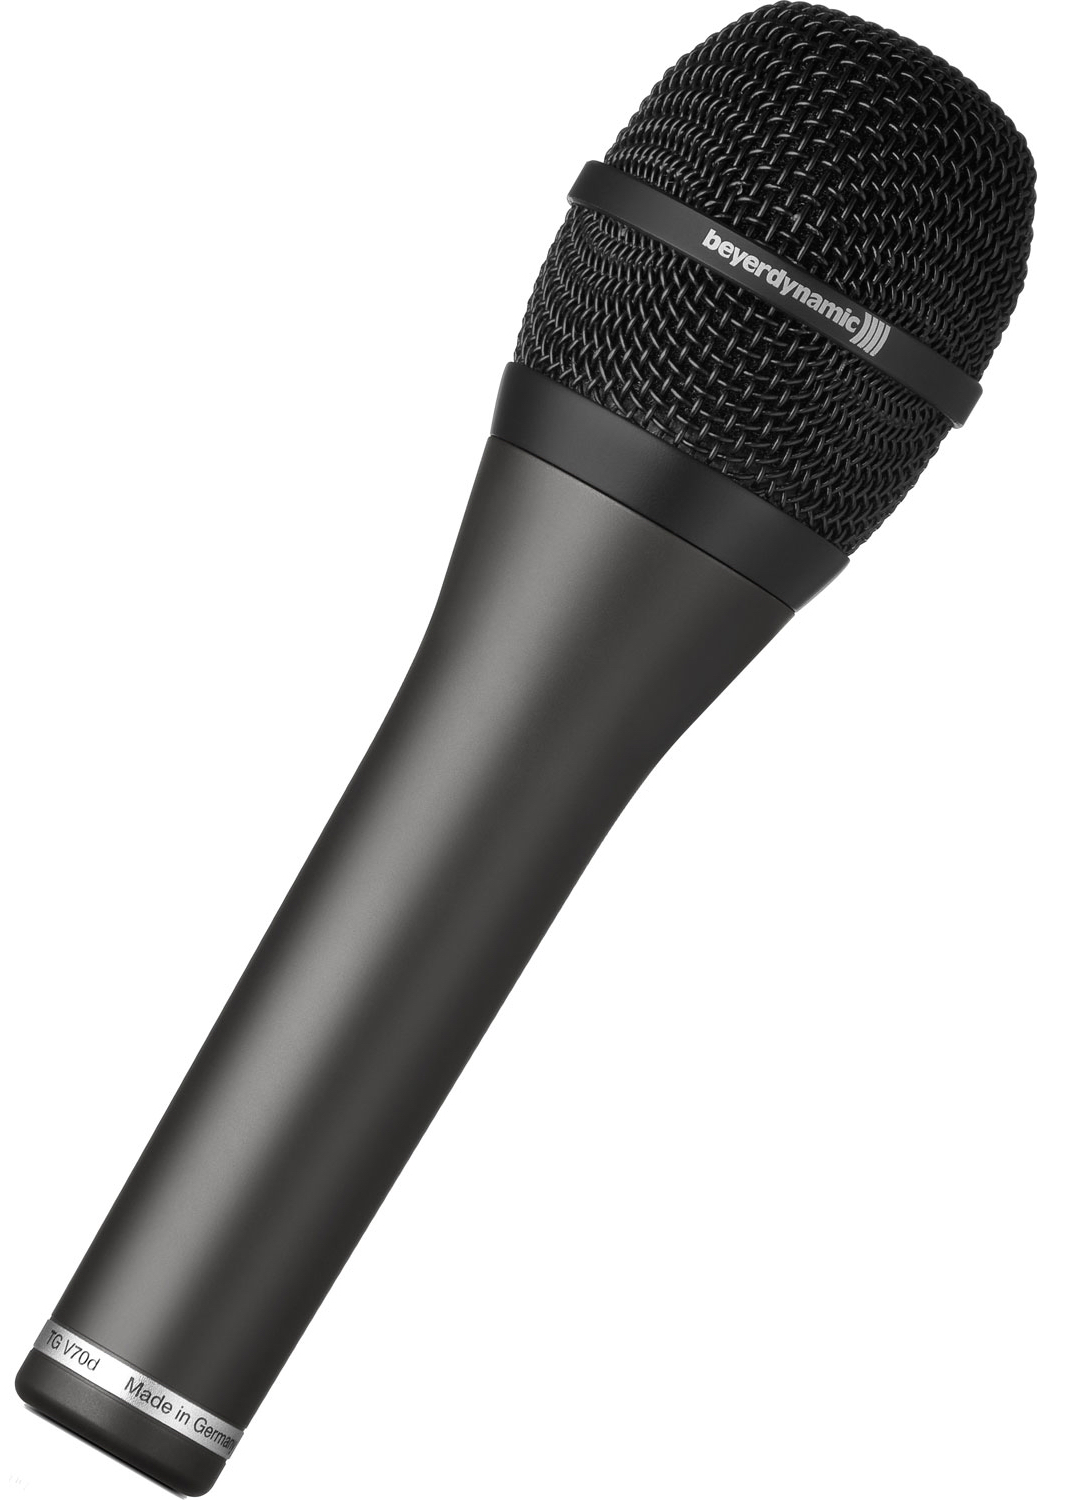 Beyerdynamic TG V70 Dynamic Hypercardioid Microphone